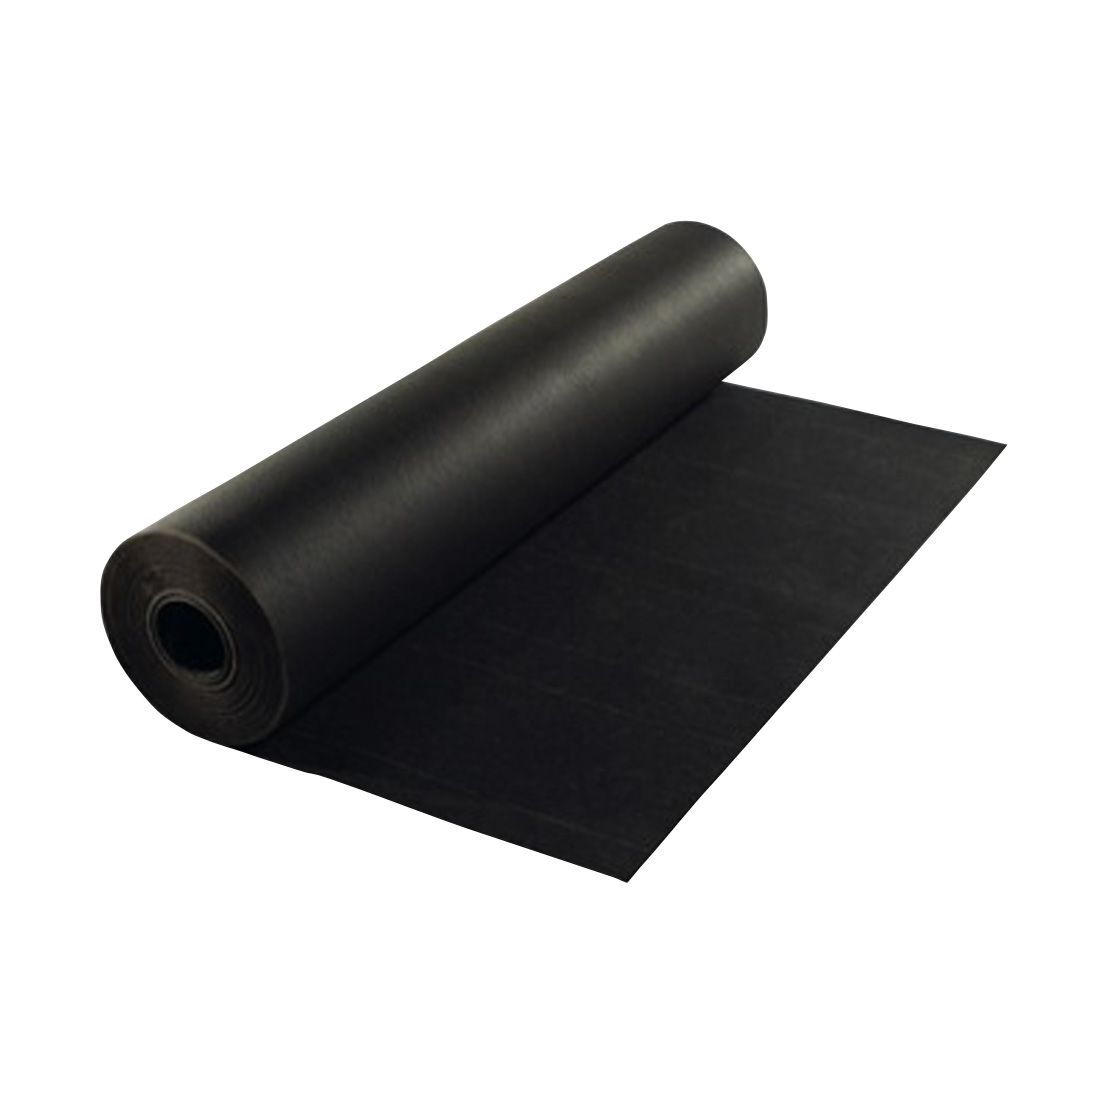 Emco 15 Light Felt Paper Group Bmr, 15 Lb Black Felt Hardwood Flooring Underlayment Paper